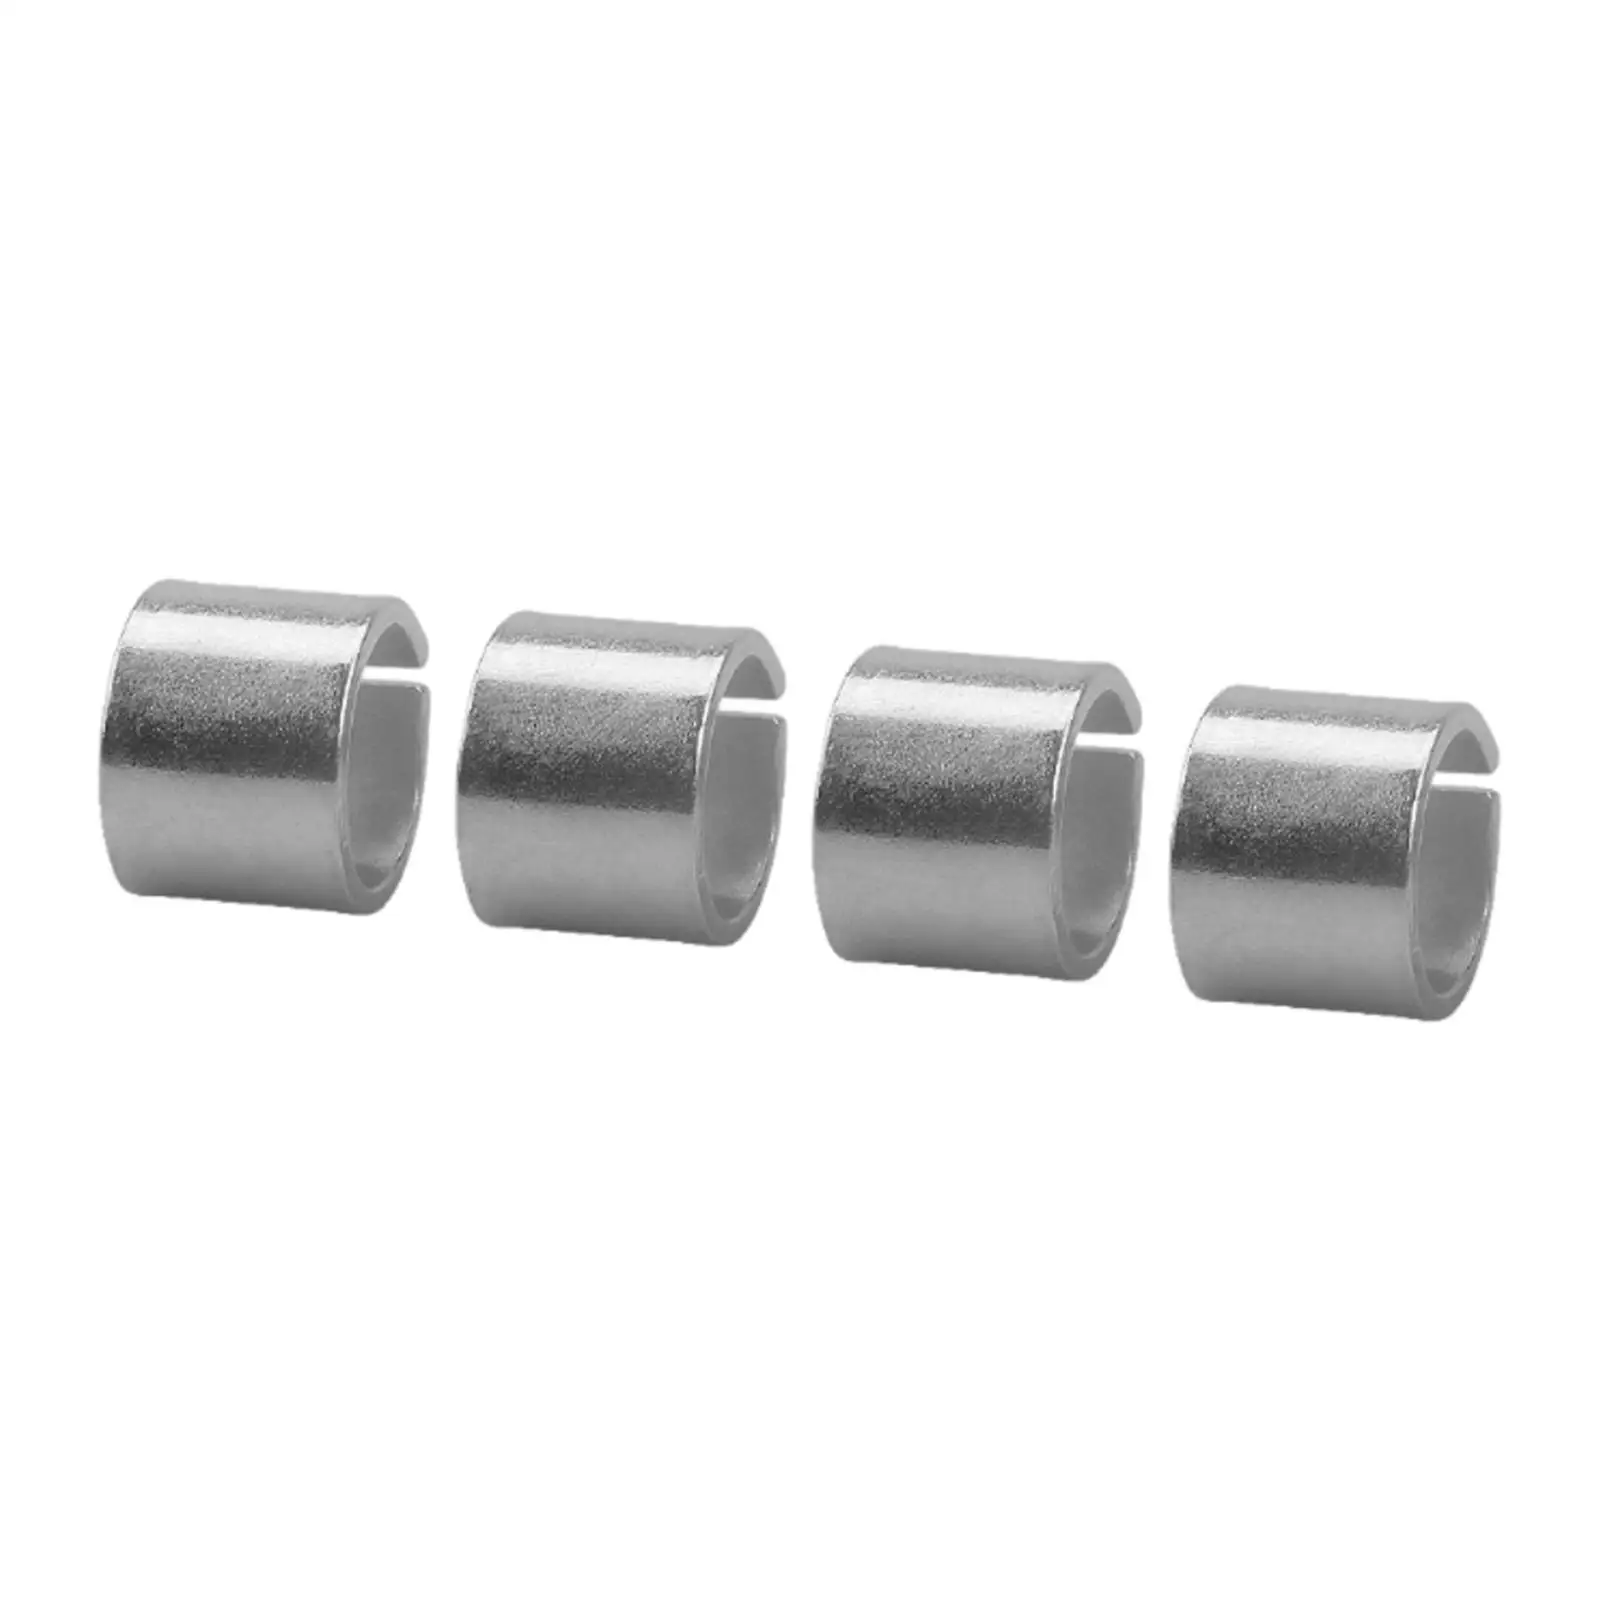 4x Cylinder Head Dowel Pin Premium replace Chevy ls LT LS1 LS3 LS2 Lq4 Accessory L82 L83 L84 L92 L99 L33 LR4